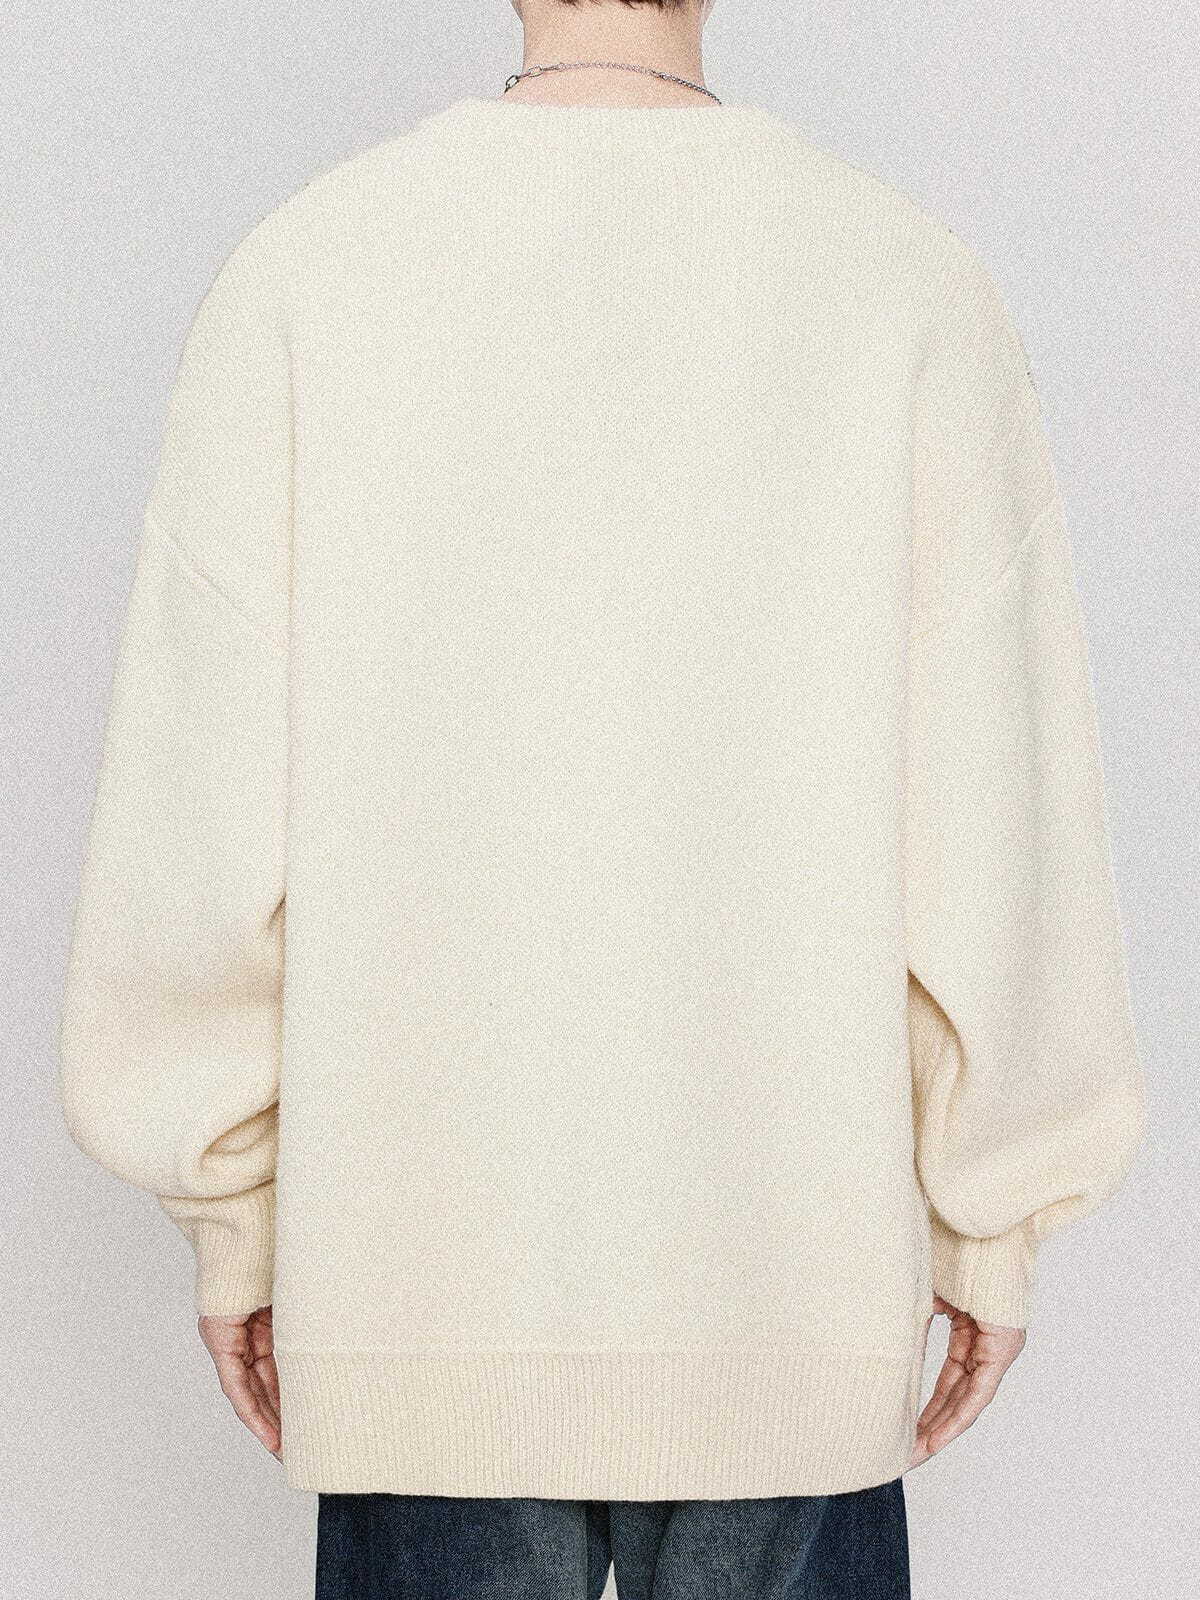 doberman print sweater edgy streetwear statement 1227